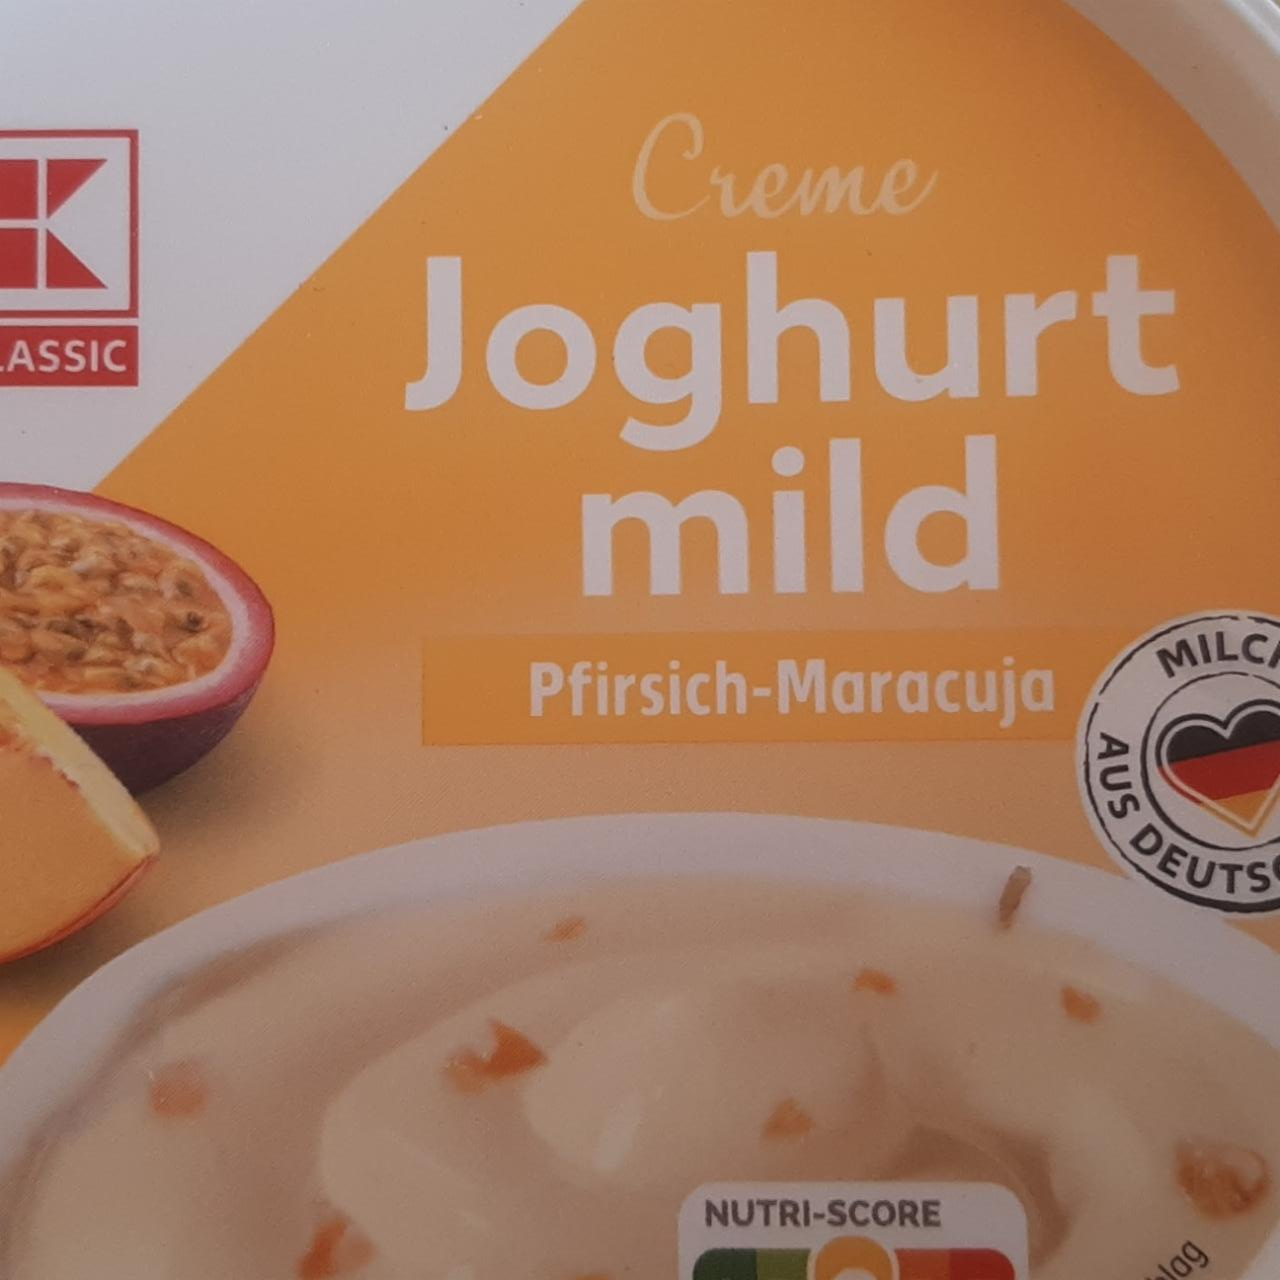 Фото - Joghurt mild Pfirsich Maracuja K-Classic